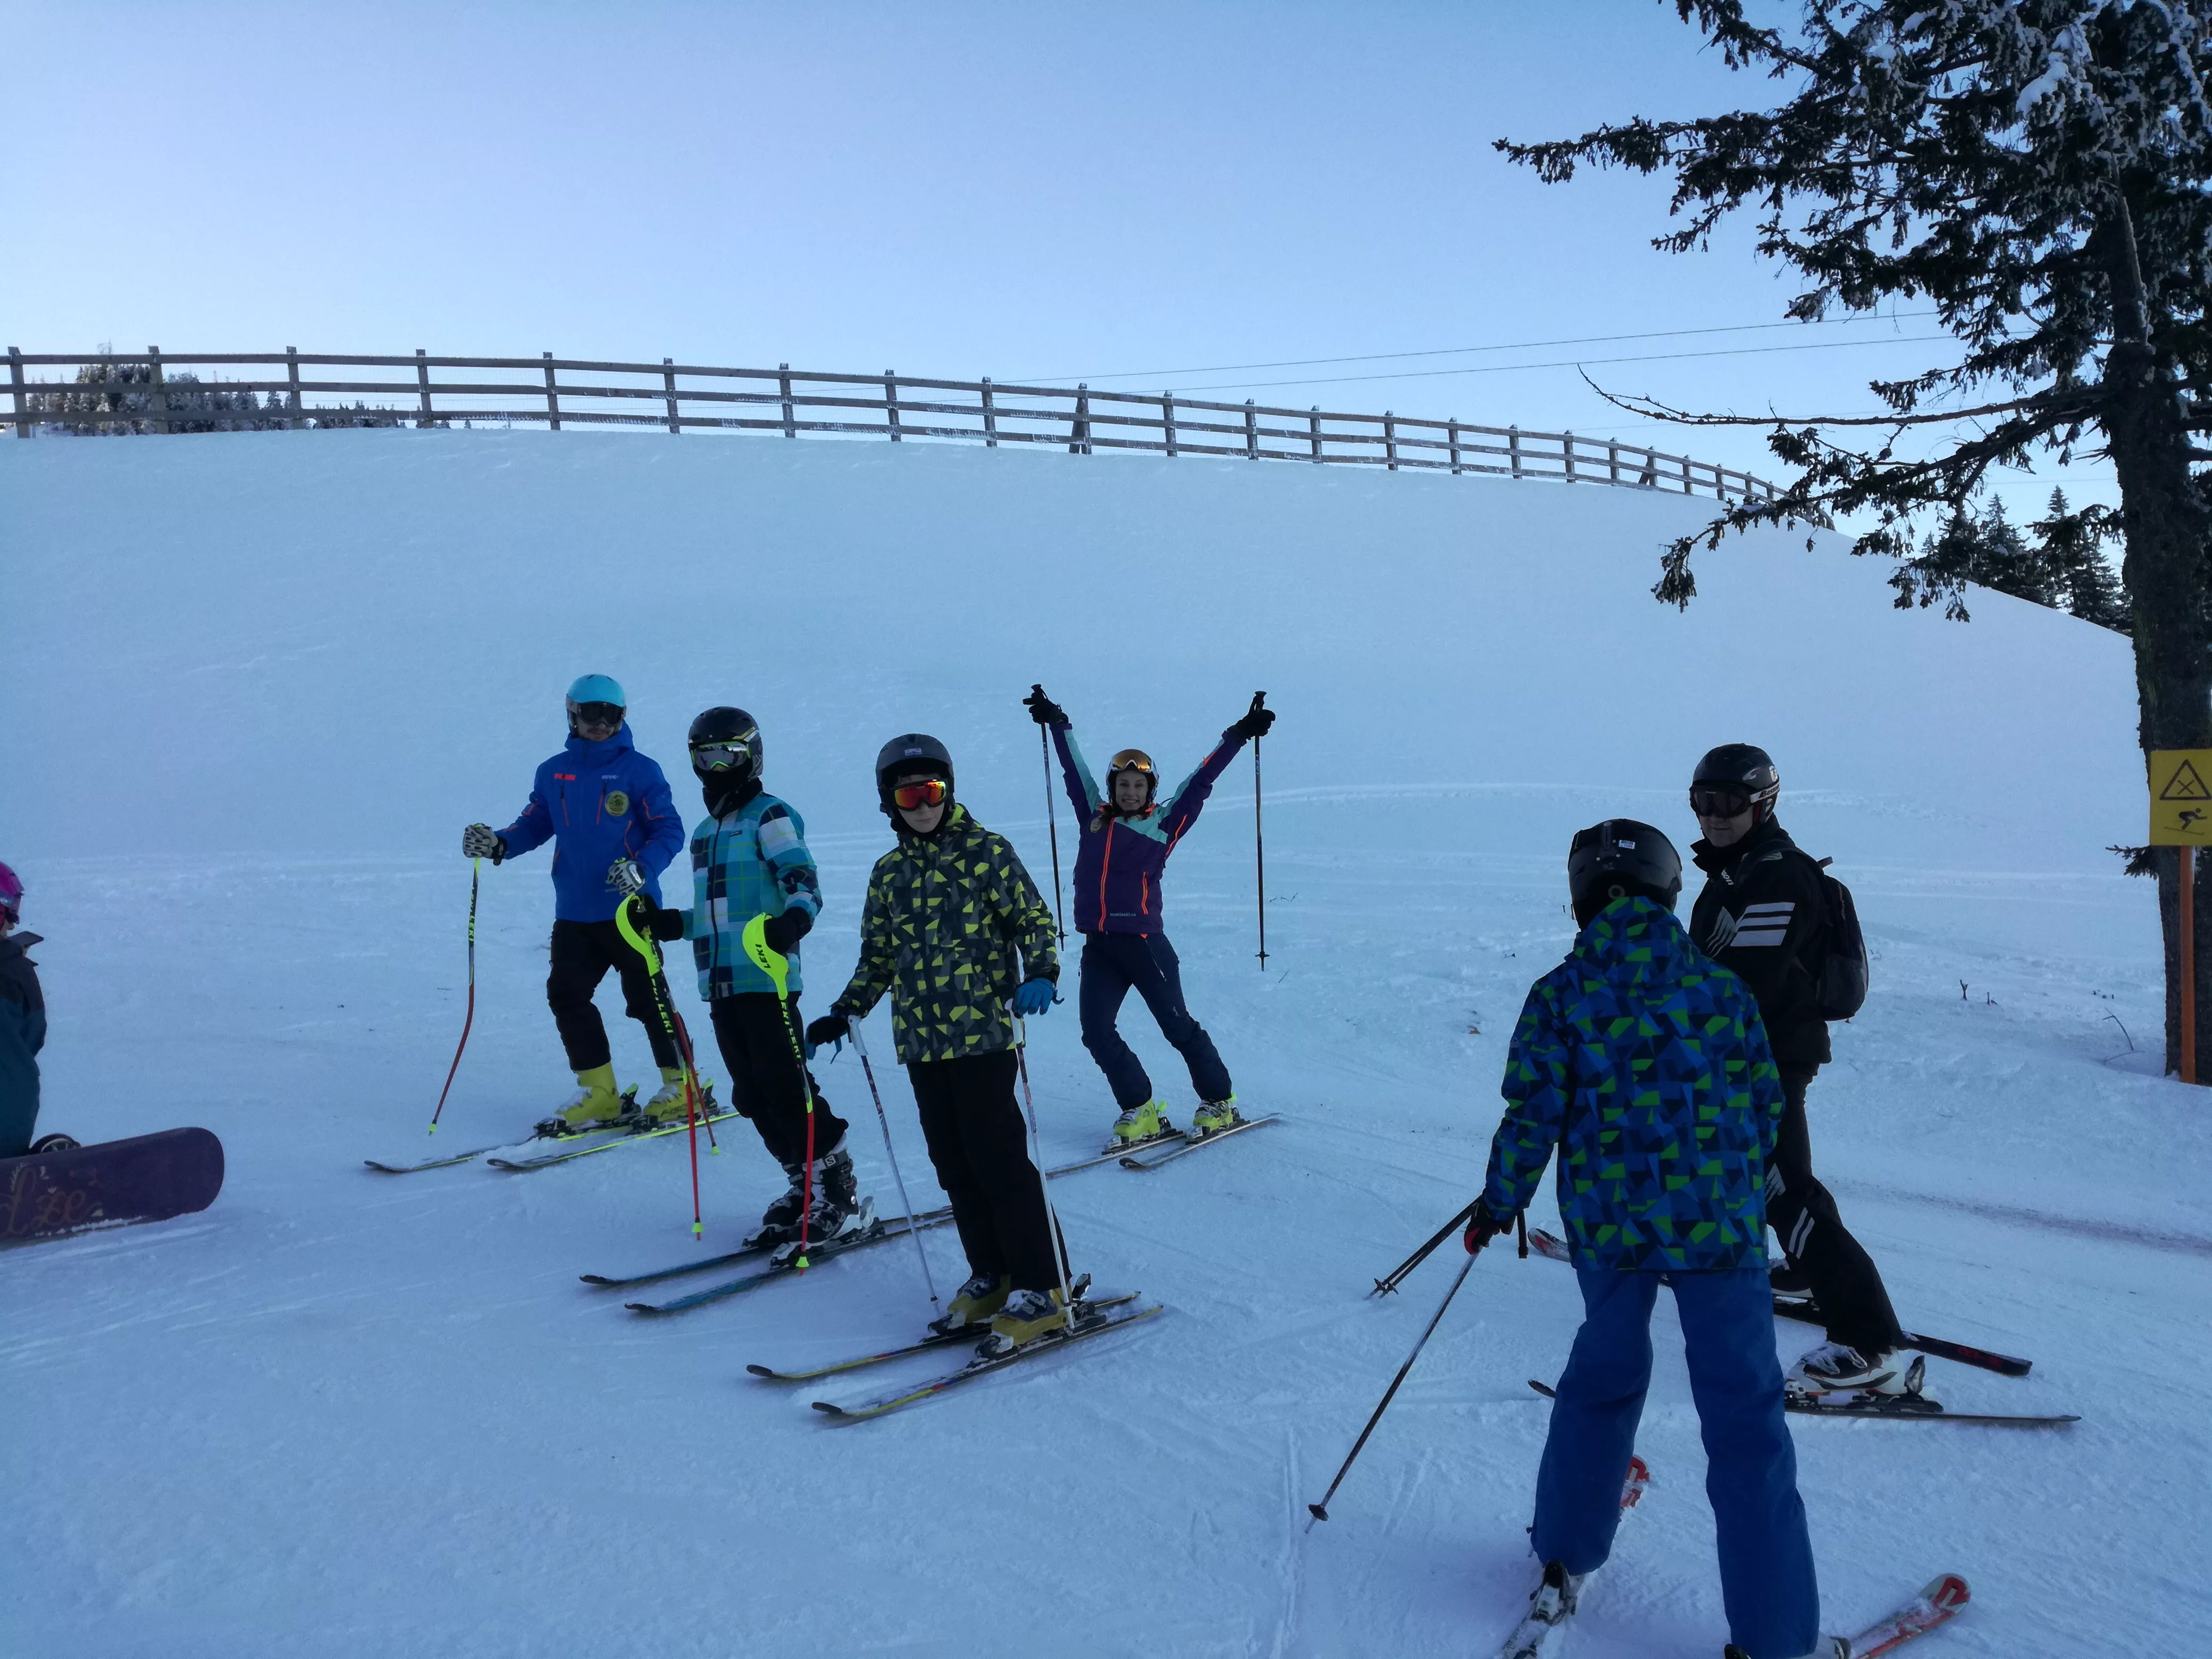 R&J Ski School&Rental in Romania, Europe | Snowboarding,Skiing - Rated 4.1